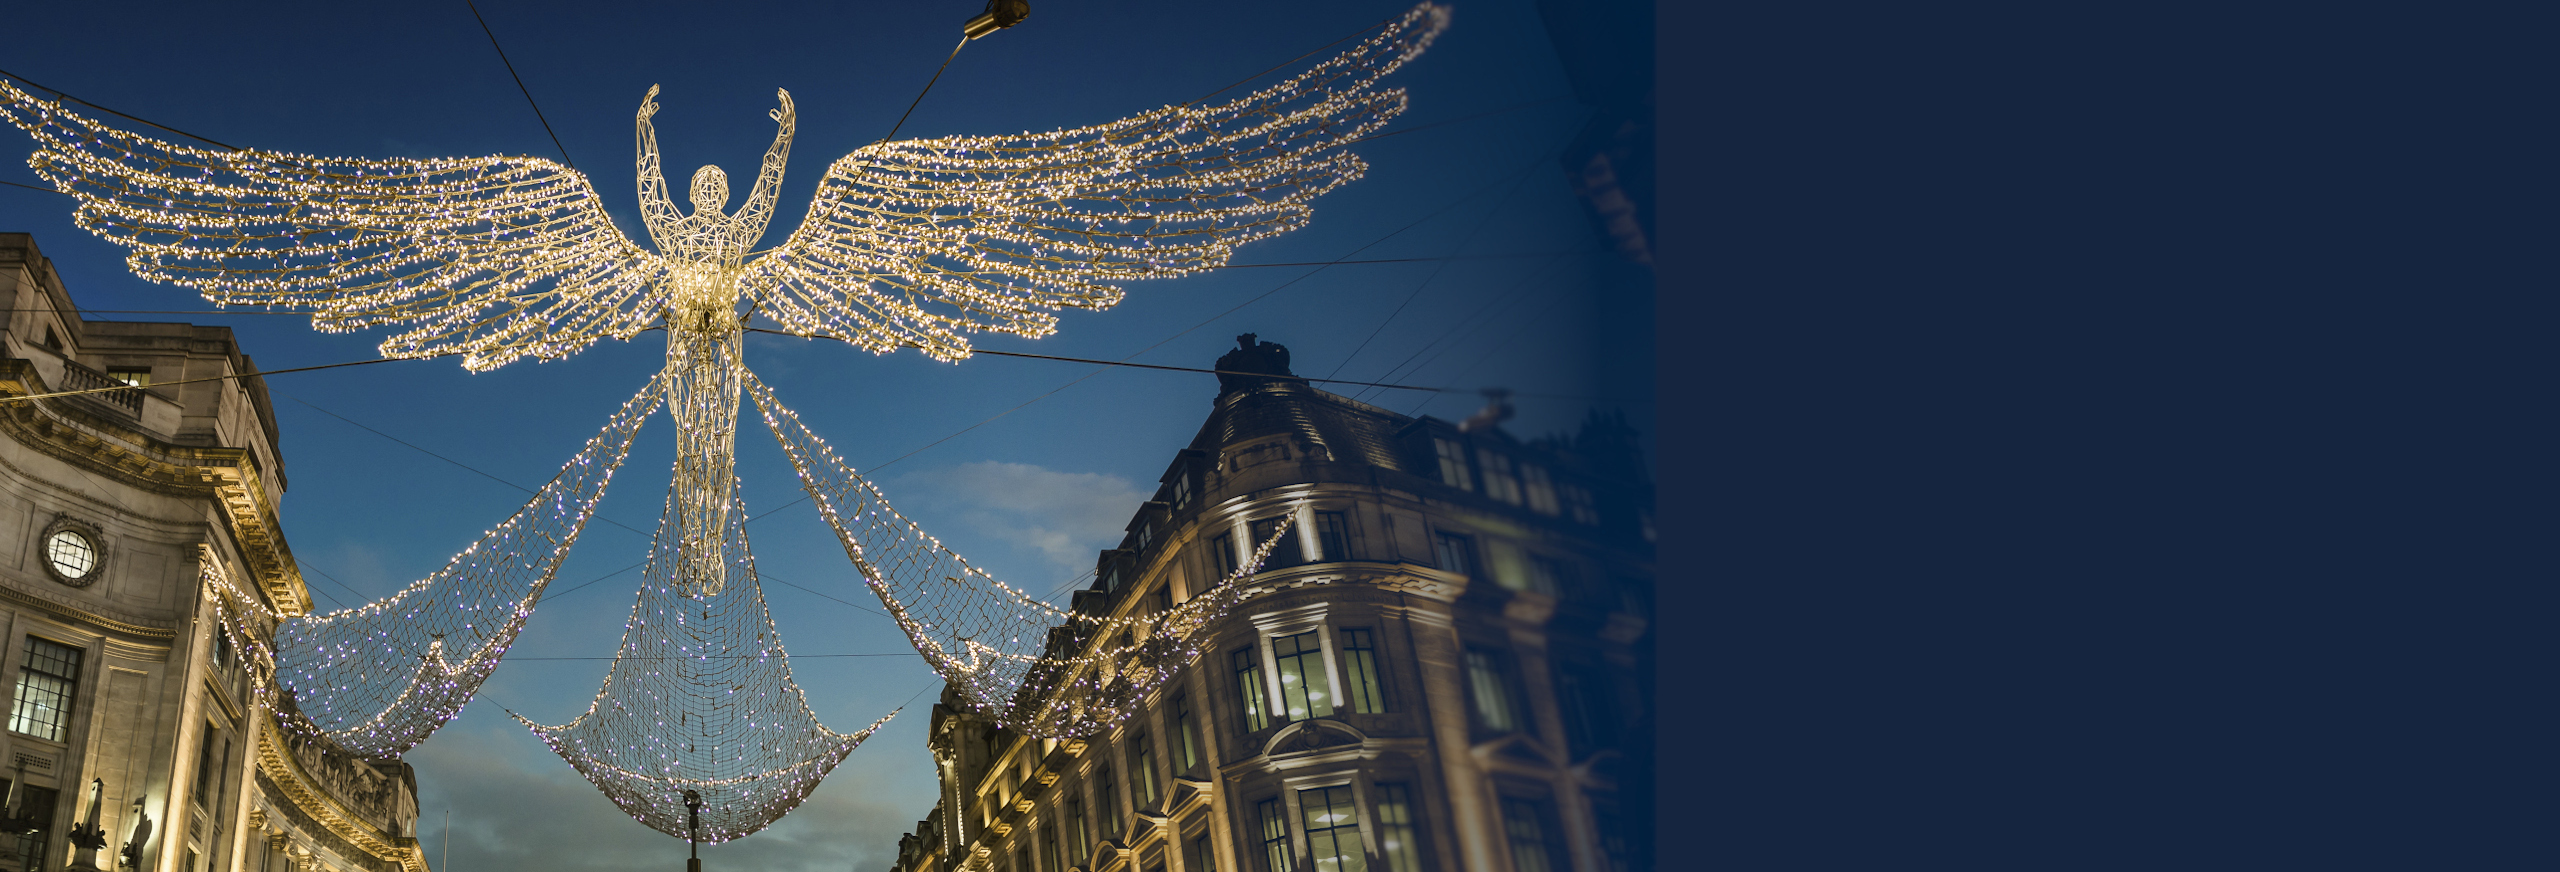 London Christmas lights on Regent Street